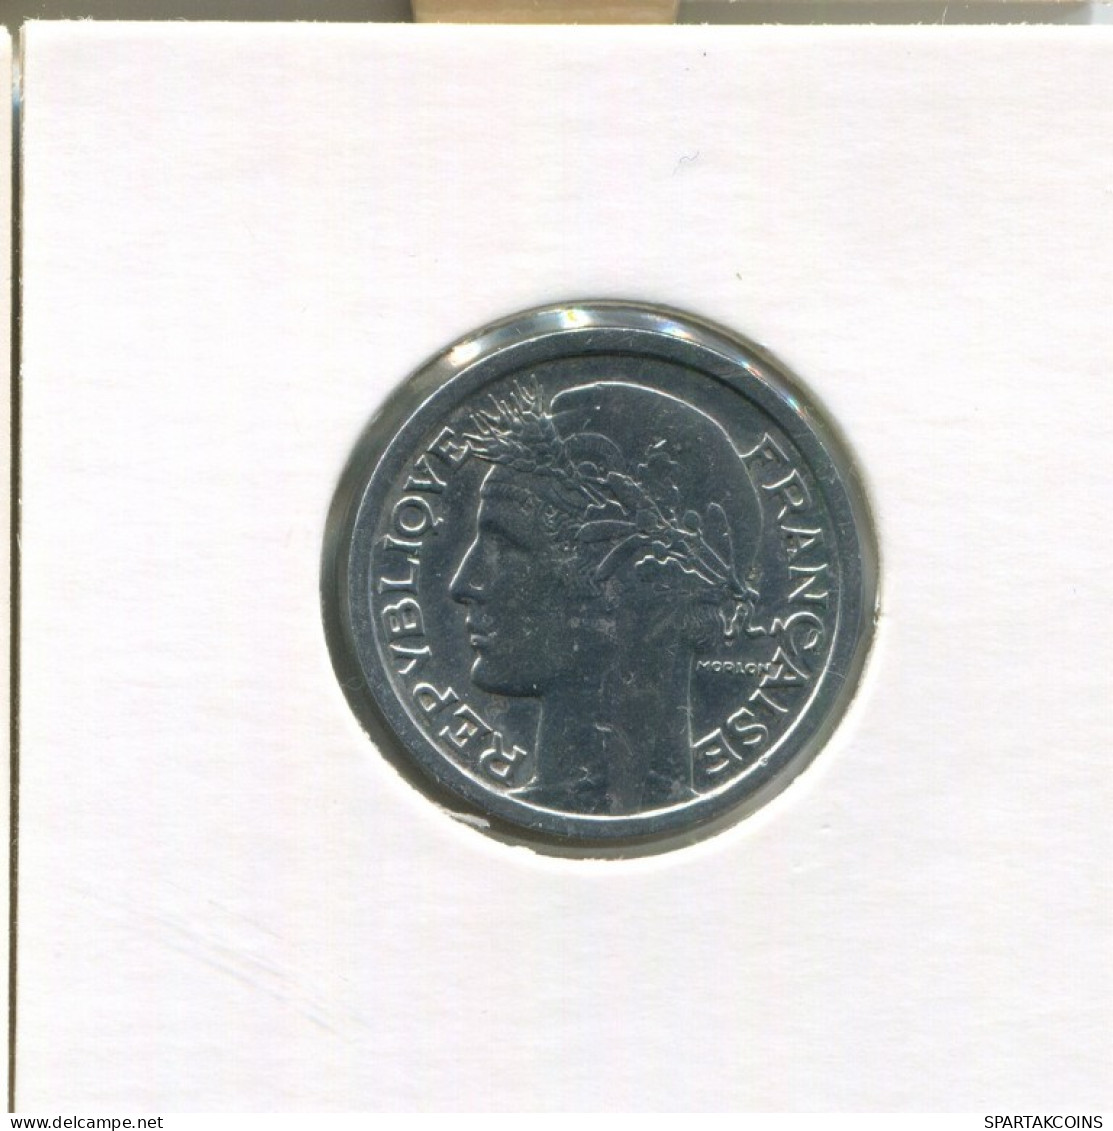 1 FRANC 1944 FRANCE Coin French Coin #AM284.U.A - 1 Franc